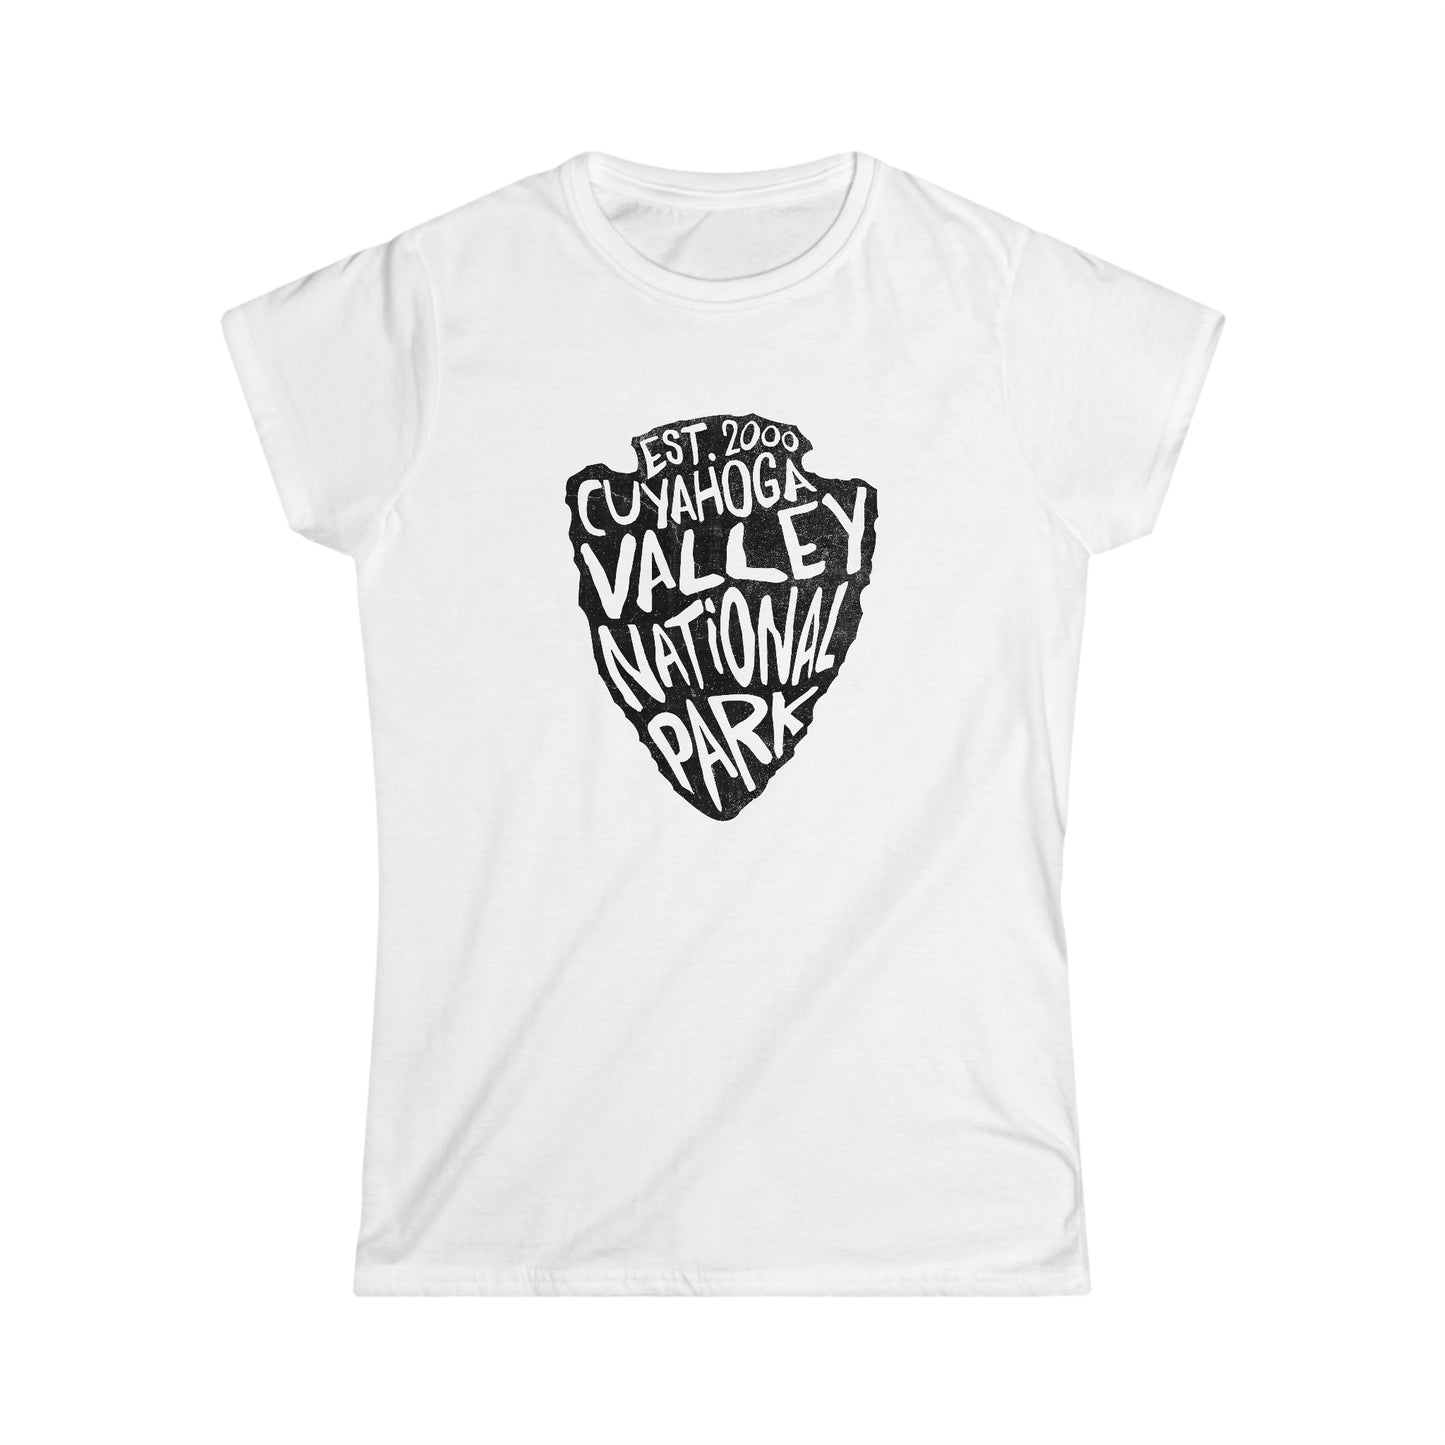 Cuyahoga Valley National Park Women's T-Shirt - Arrowhead Design